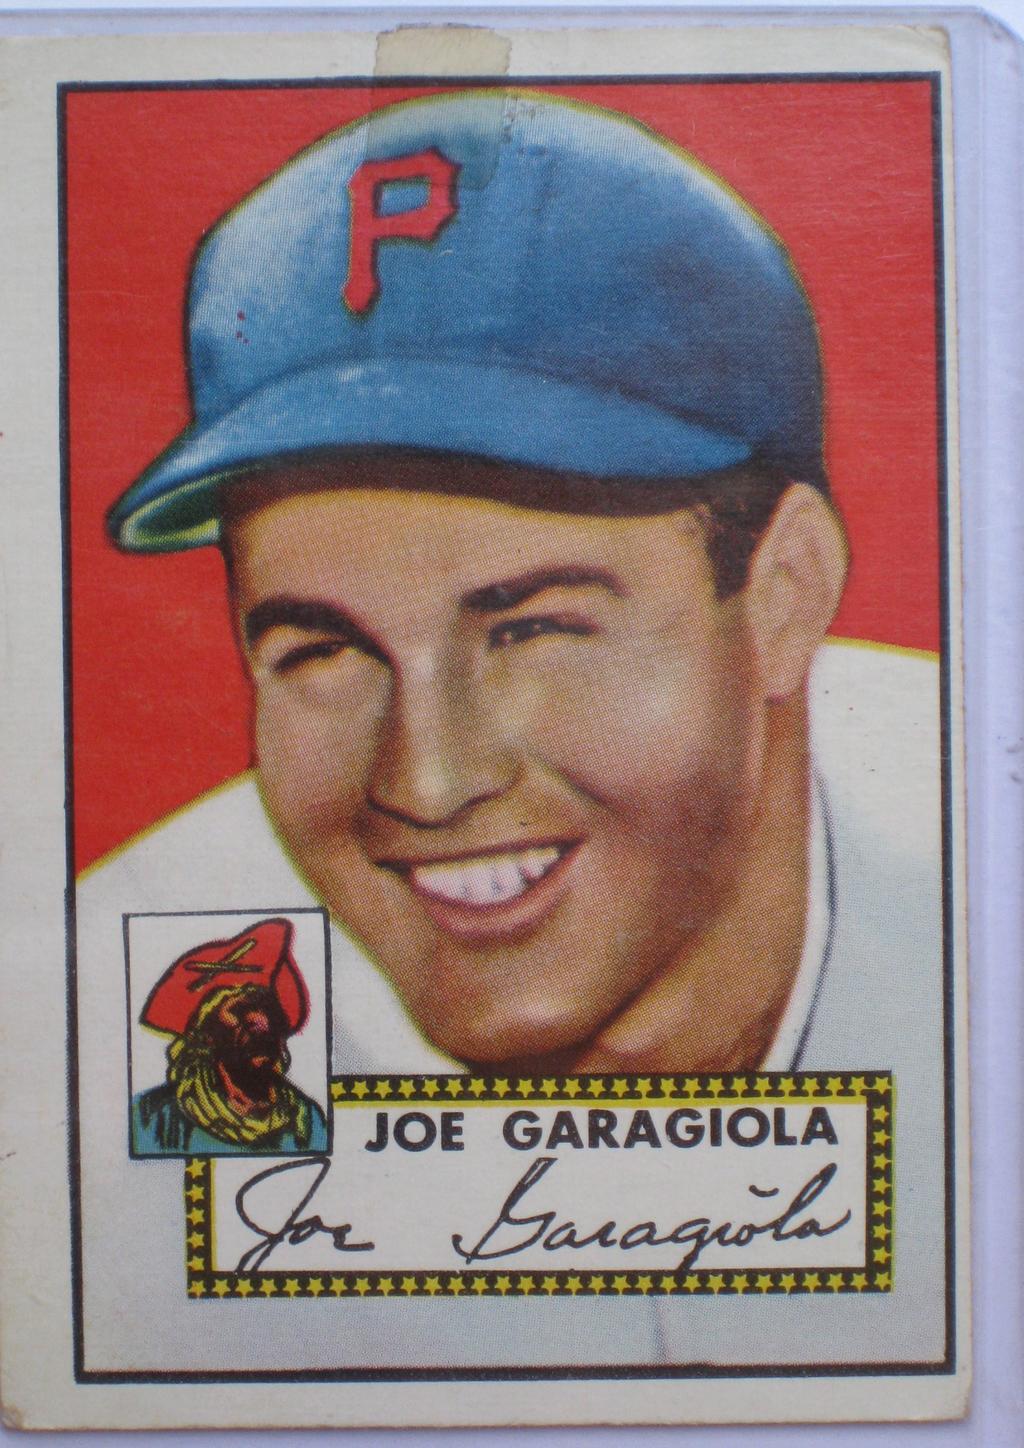 Joe Garagiola dead at 90; so-so MLB catcher found fame as broadcaster